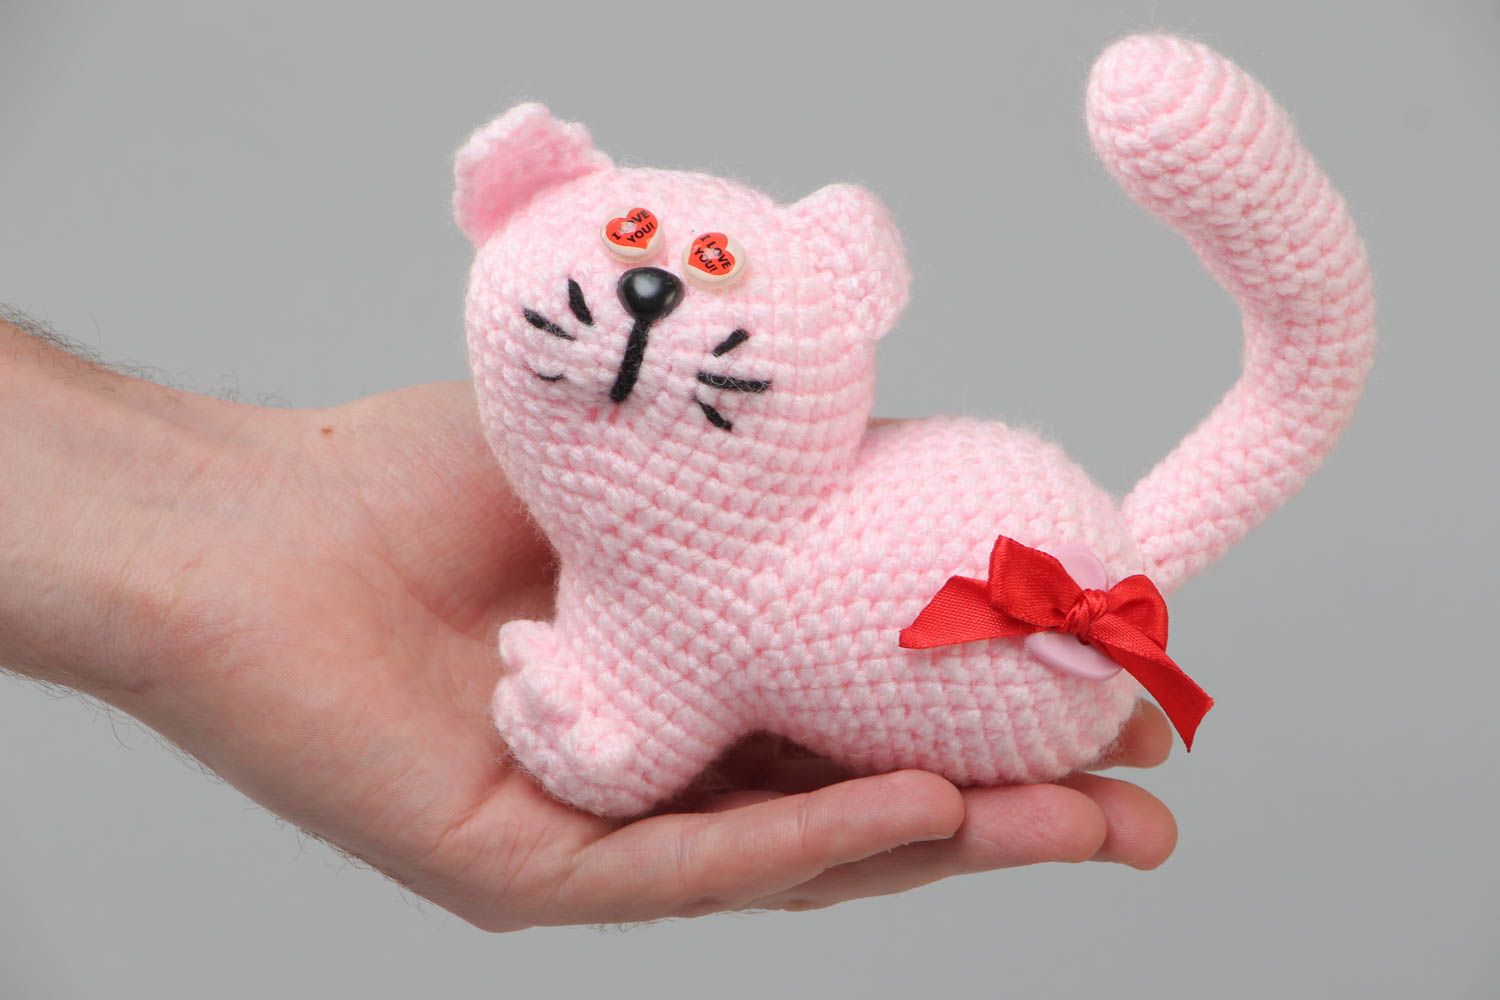 Small handmade crocheted toy made of acrylic yarns lovely kitty nursery decor photo 5